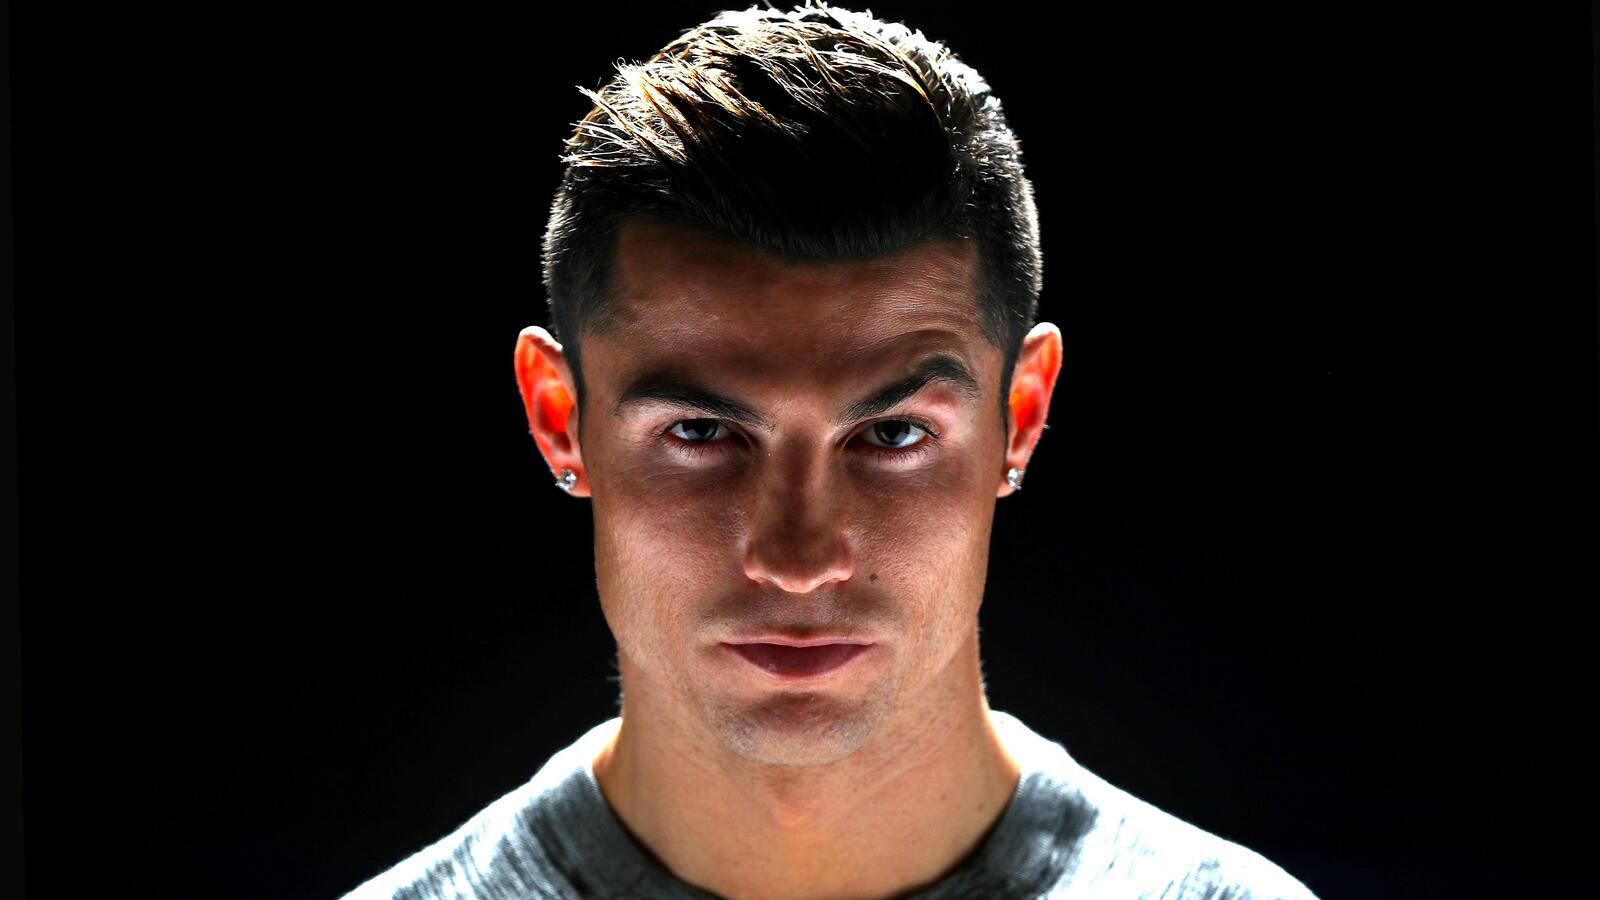 Wallpapers Cristiano Ronaldo face portrait earrings on the desktop